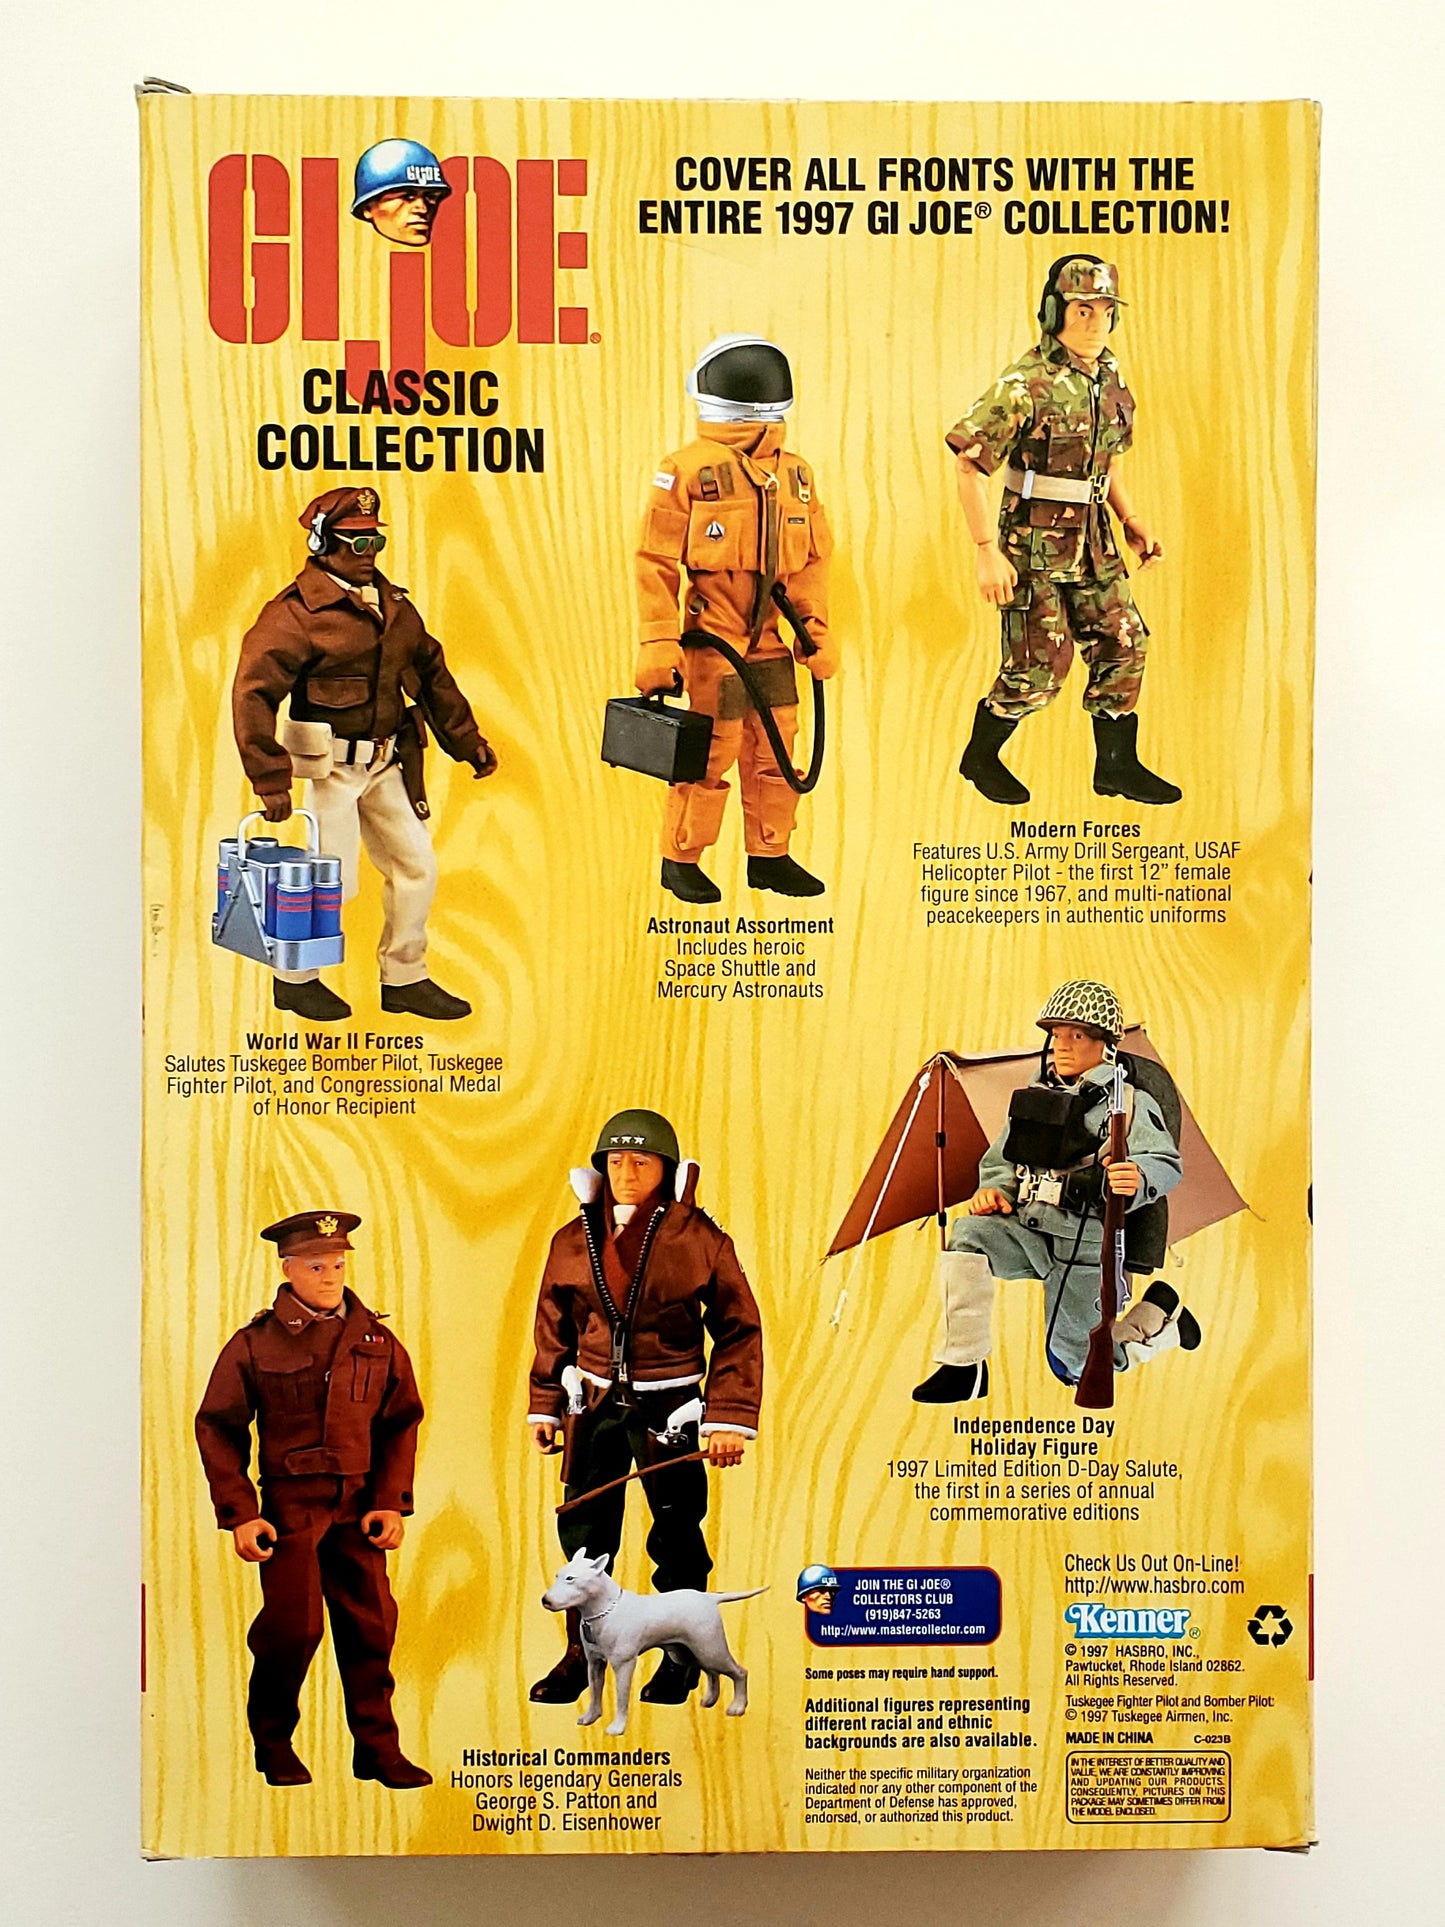 G.I. Joe Classic Collection Navy Aviation Fuel Handler